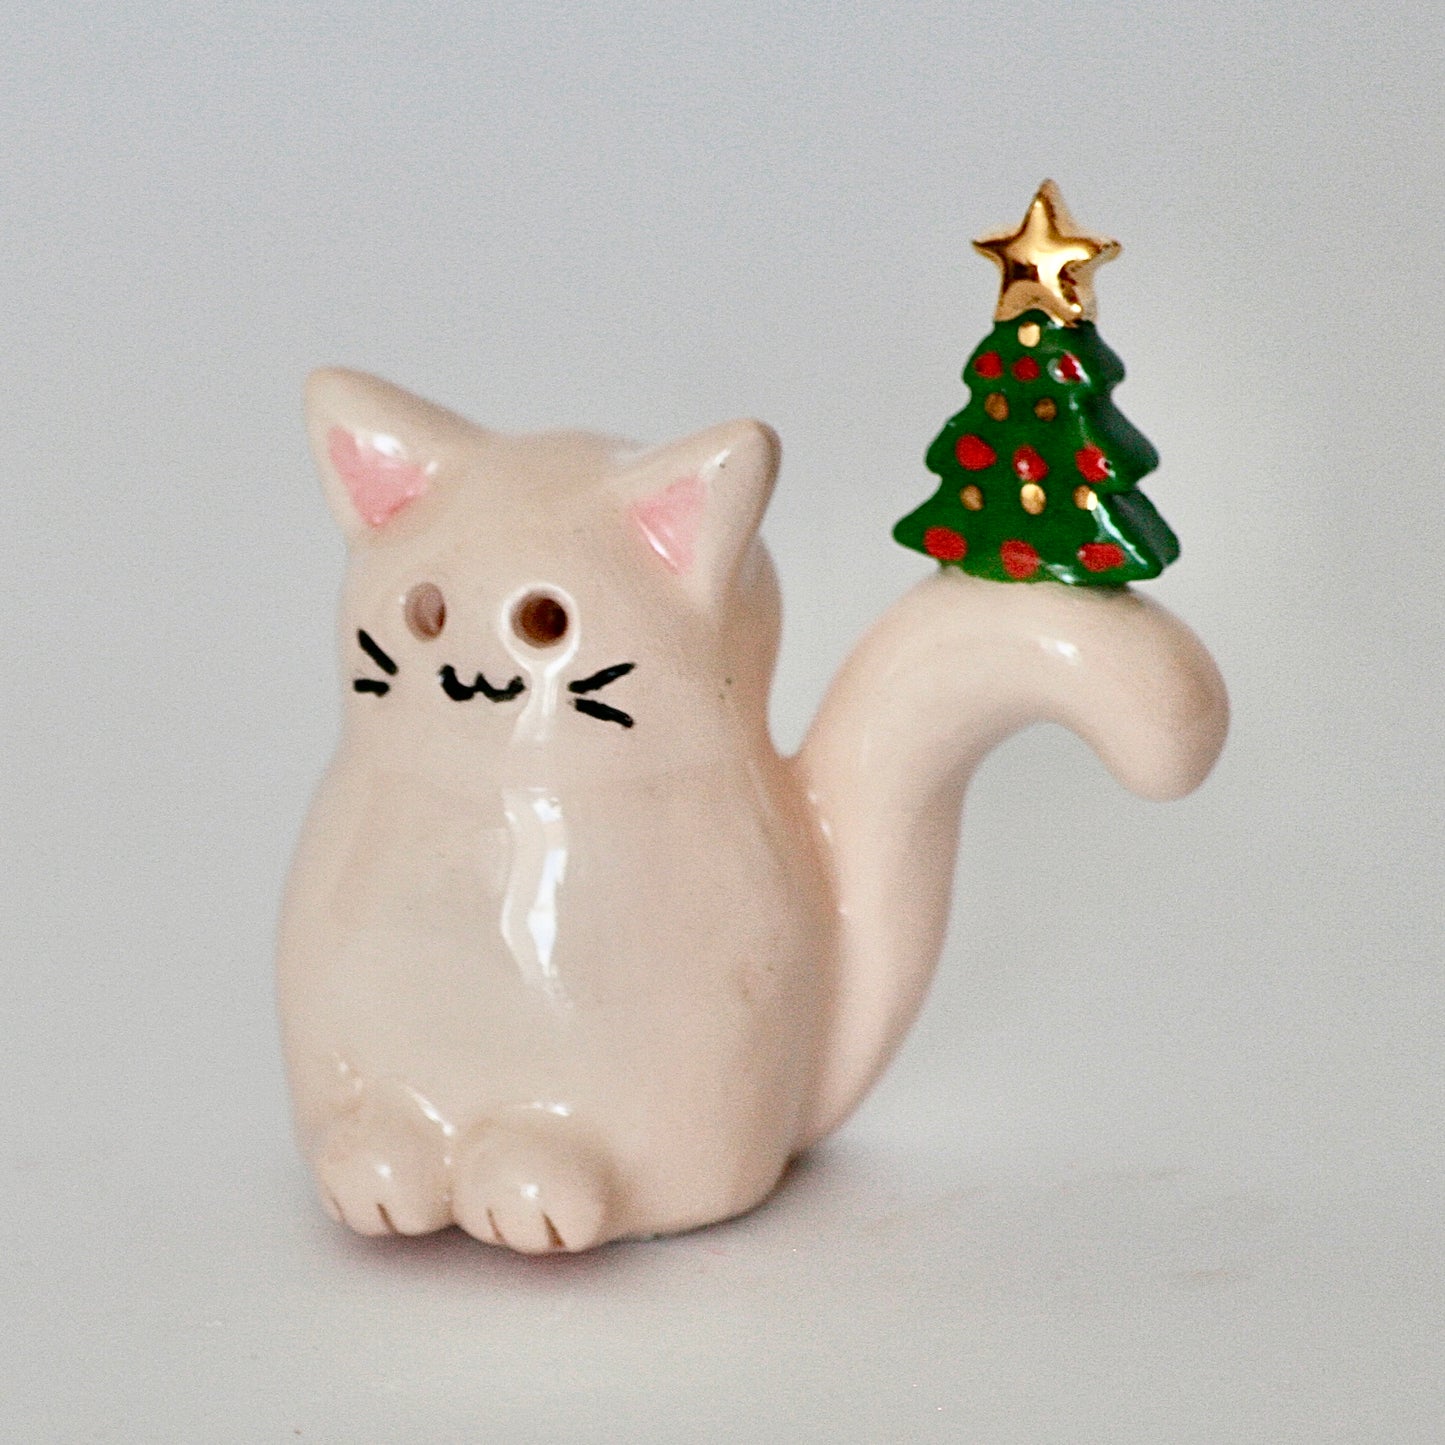 Kitty with Holiday Tree